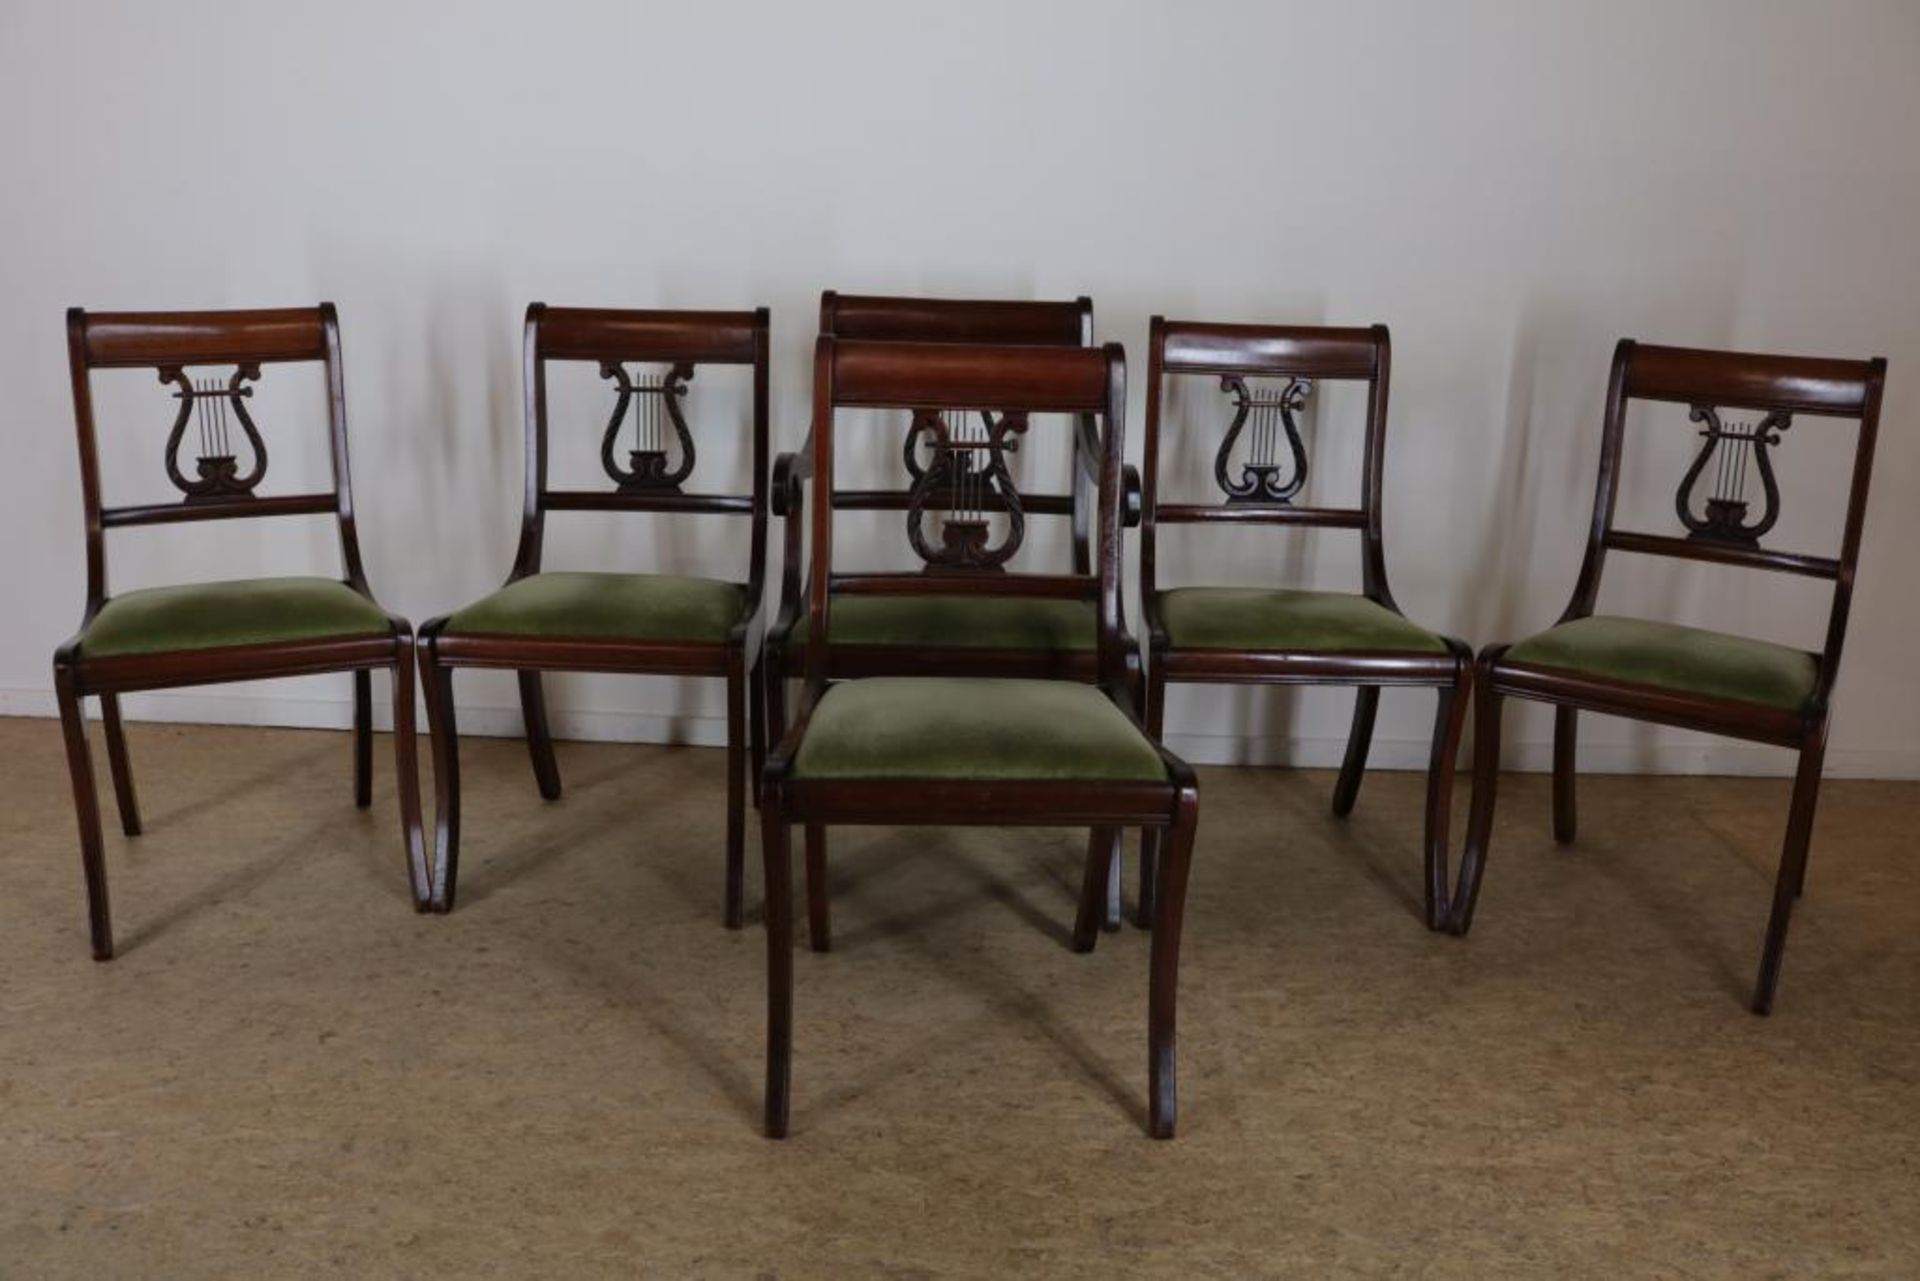 Serie van 6 mahonie stoelen met harpleuning en groen velourse zitting, w.o. armstoel.